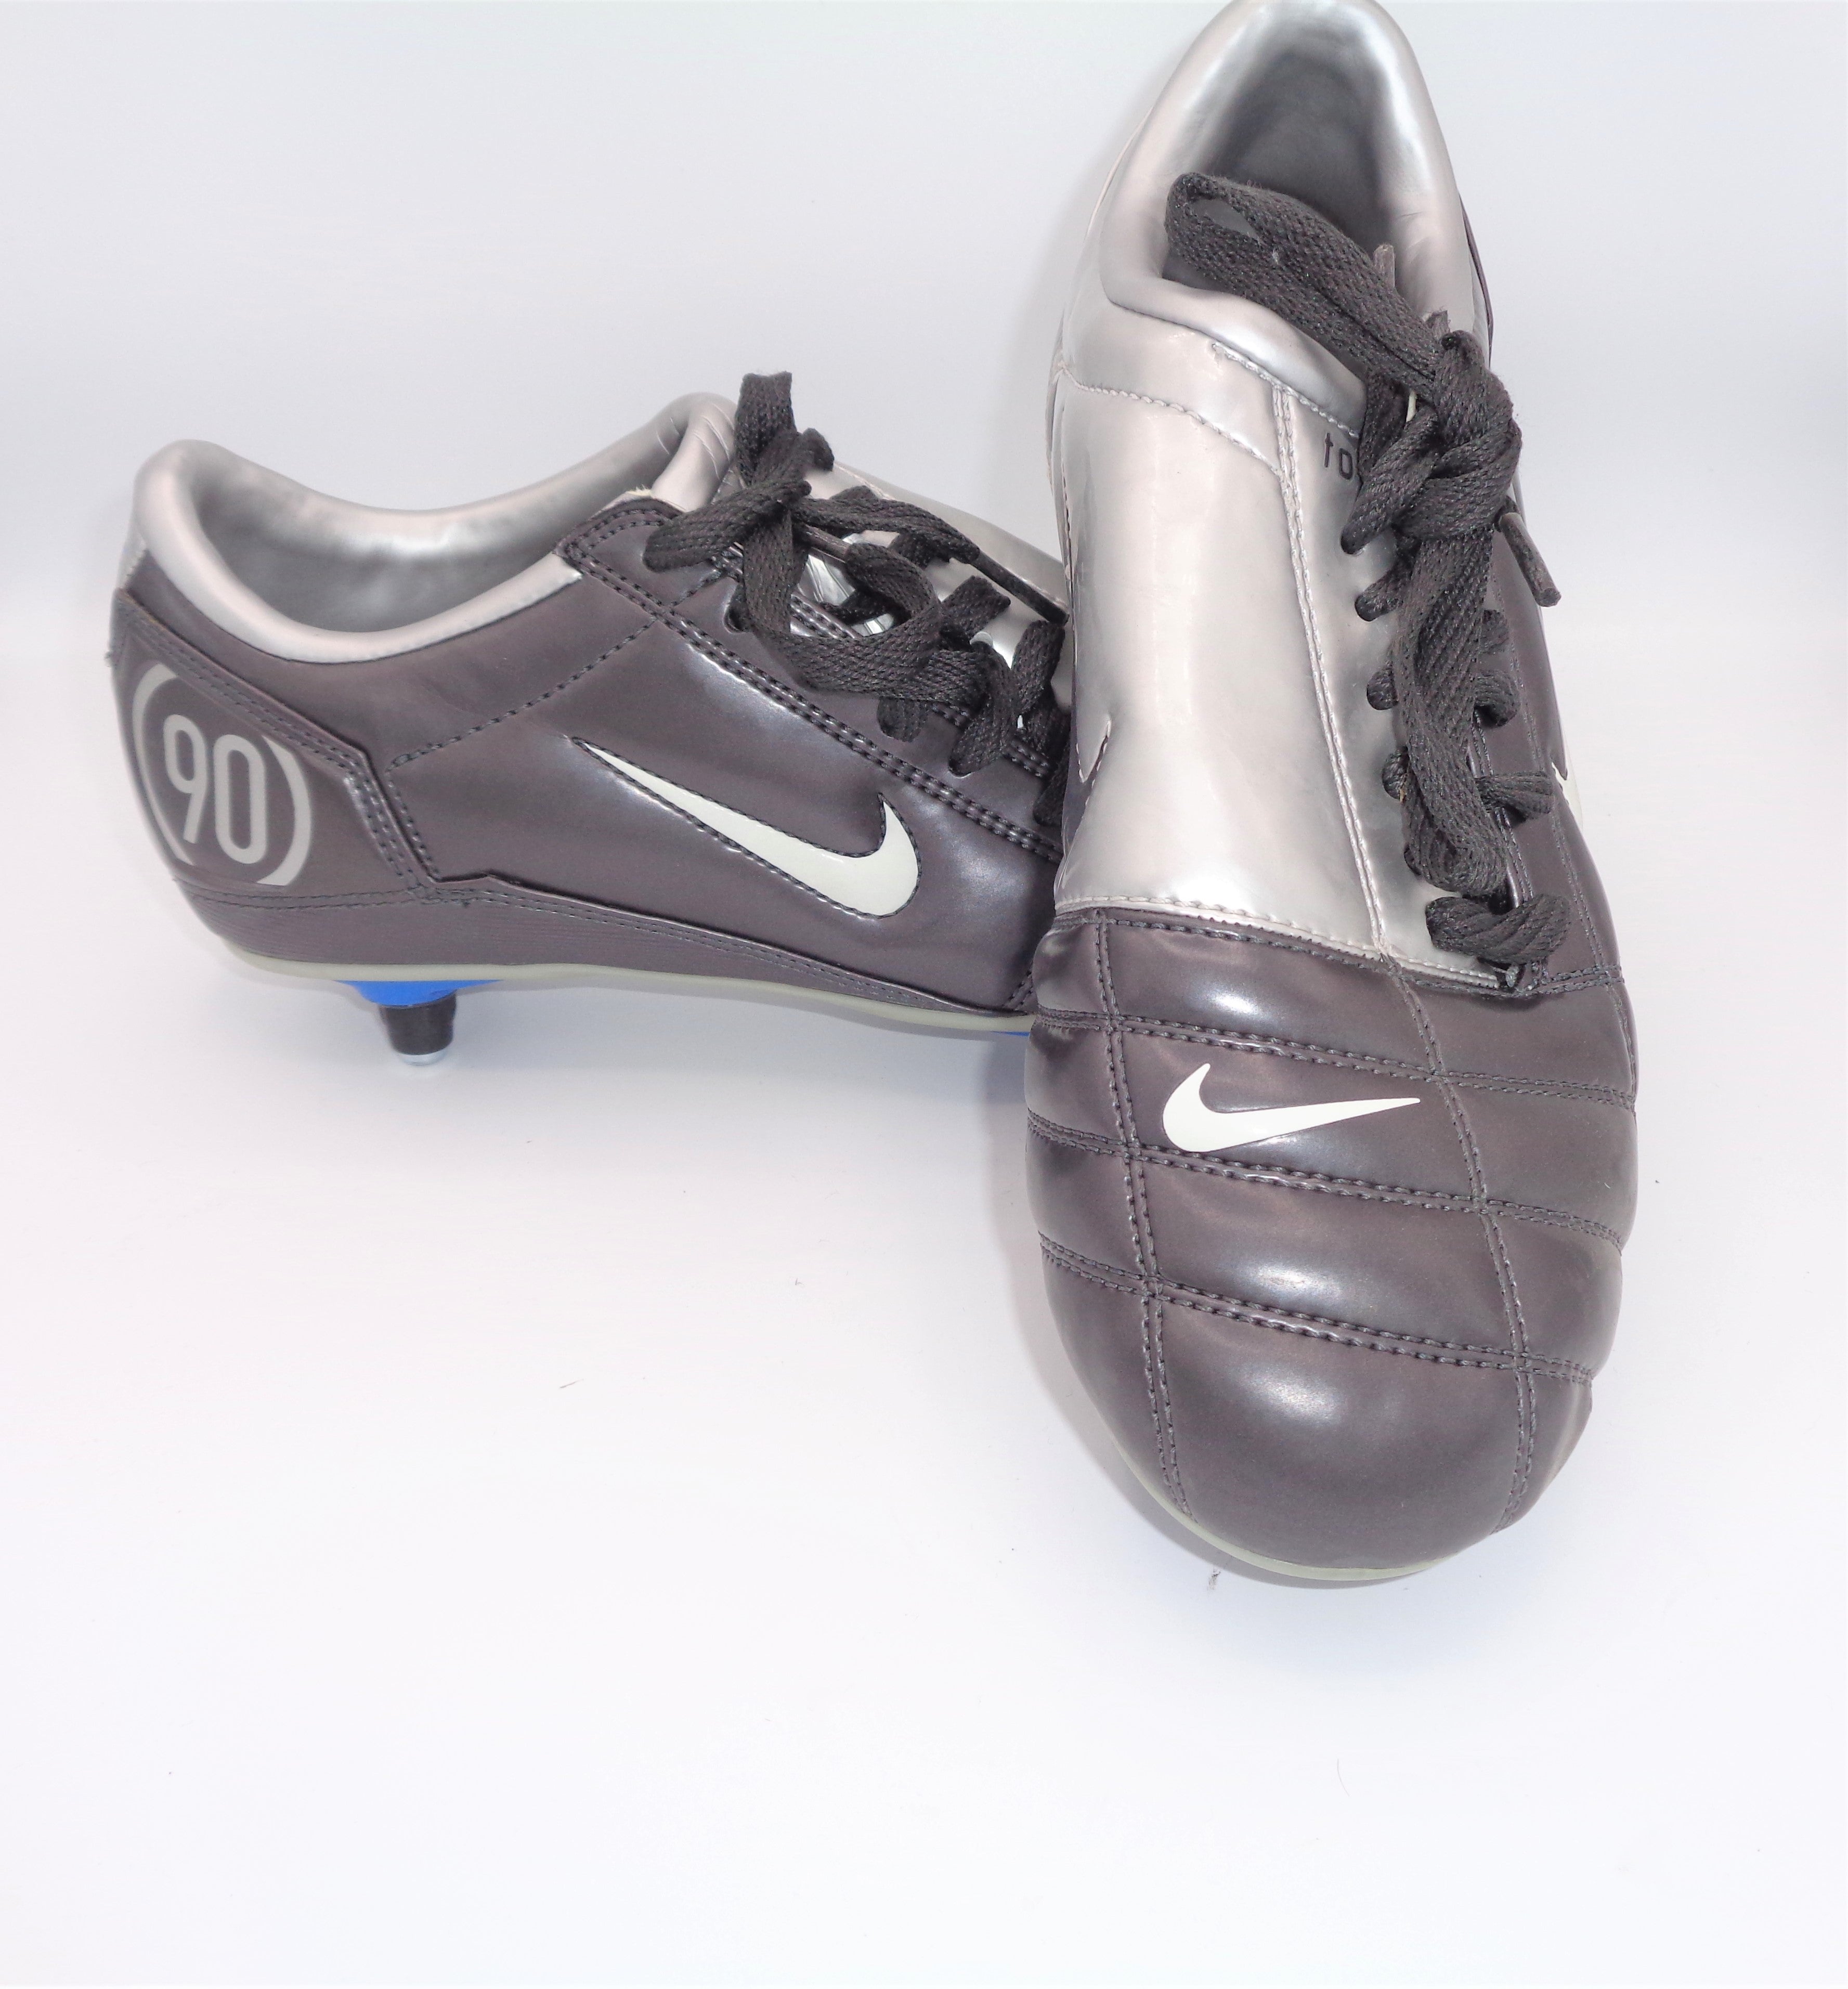 NIKE TOTAL 90 III 3 SG FOOTBALL BOOTS - NIKE - T90 - SIZE 6.5